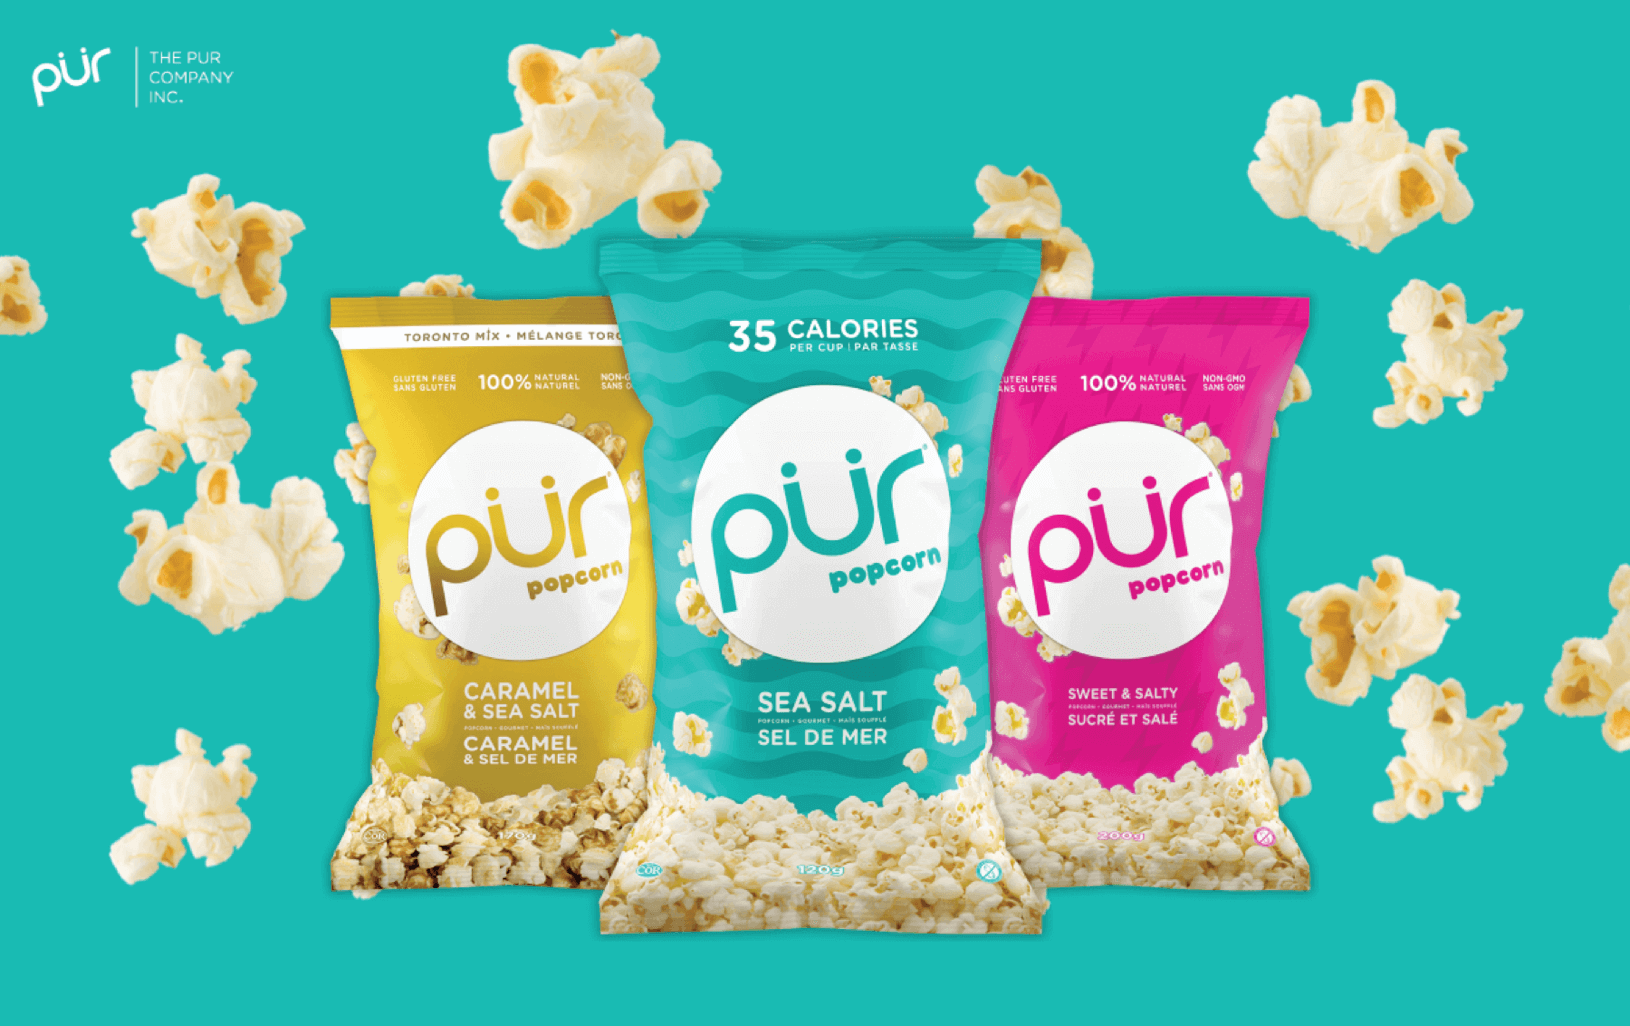 pur popcorn website responsive